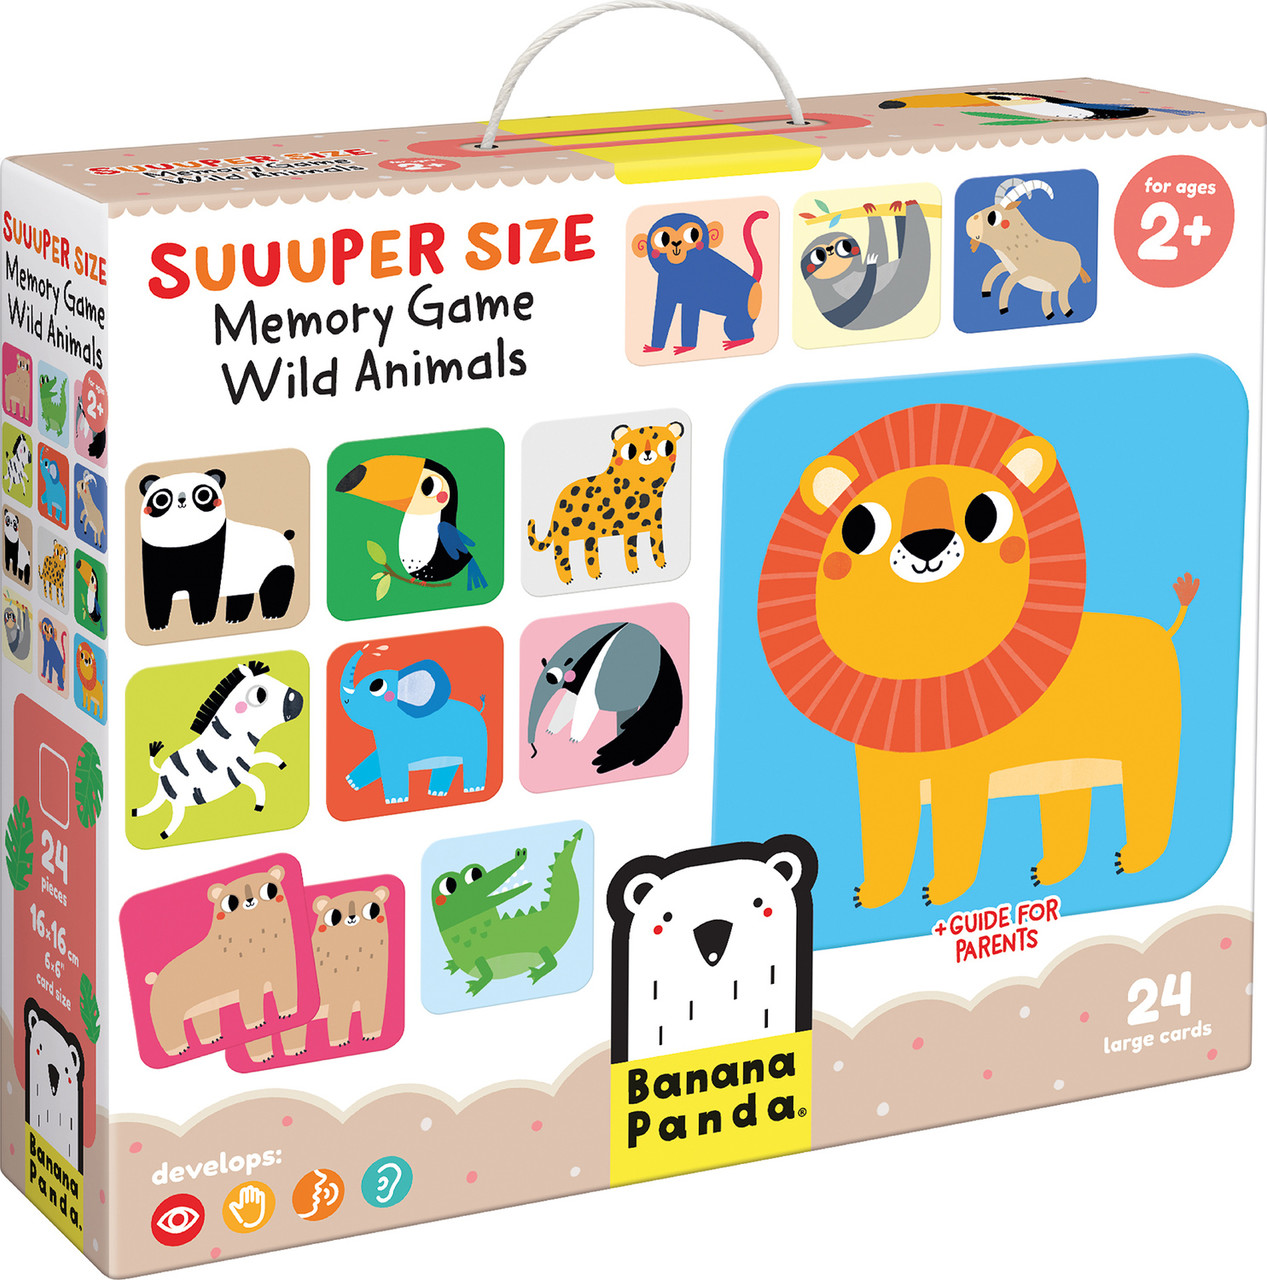 Suuuper Size Memory Game Wild Animals 1